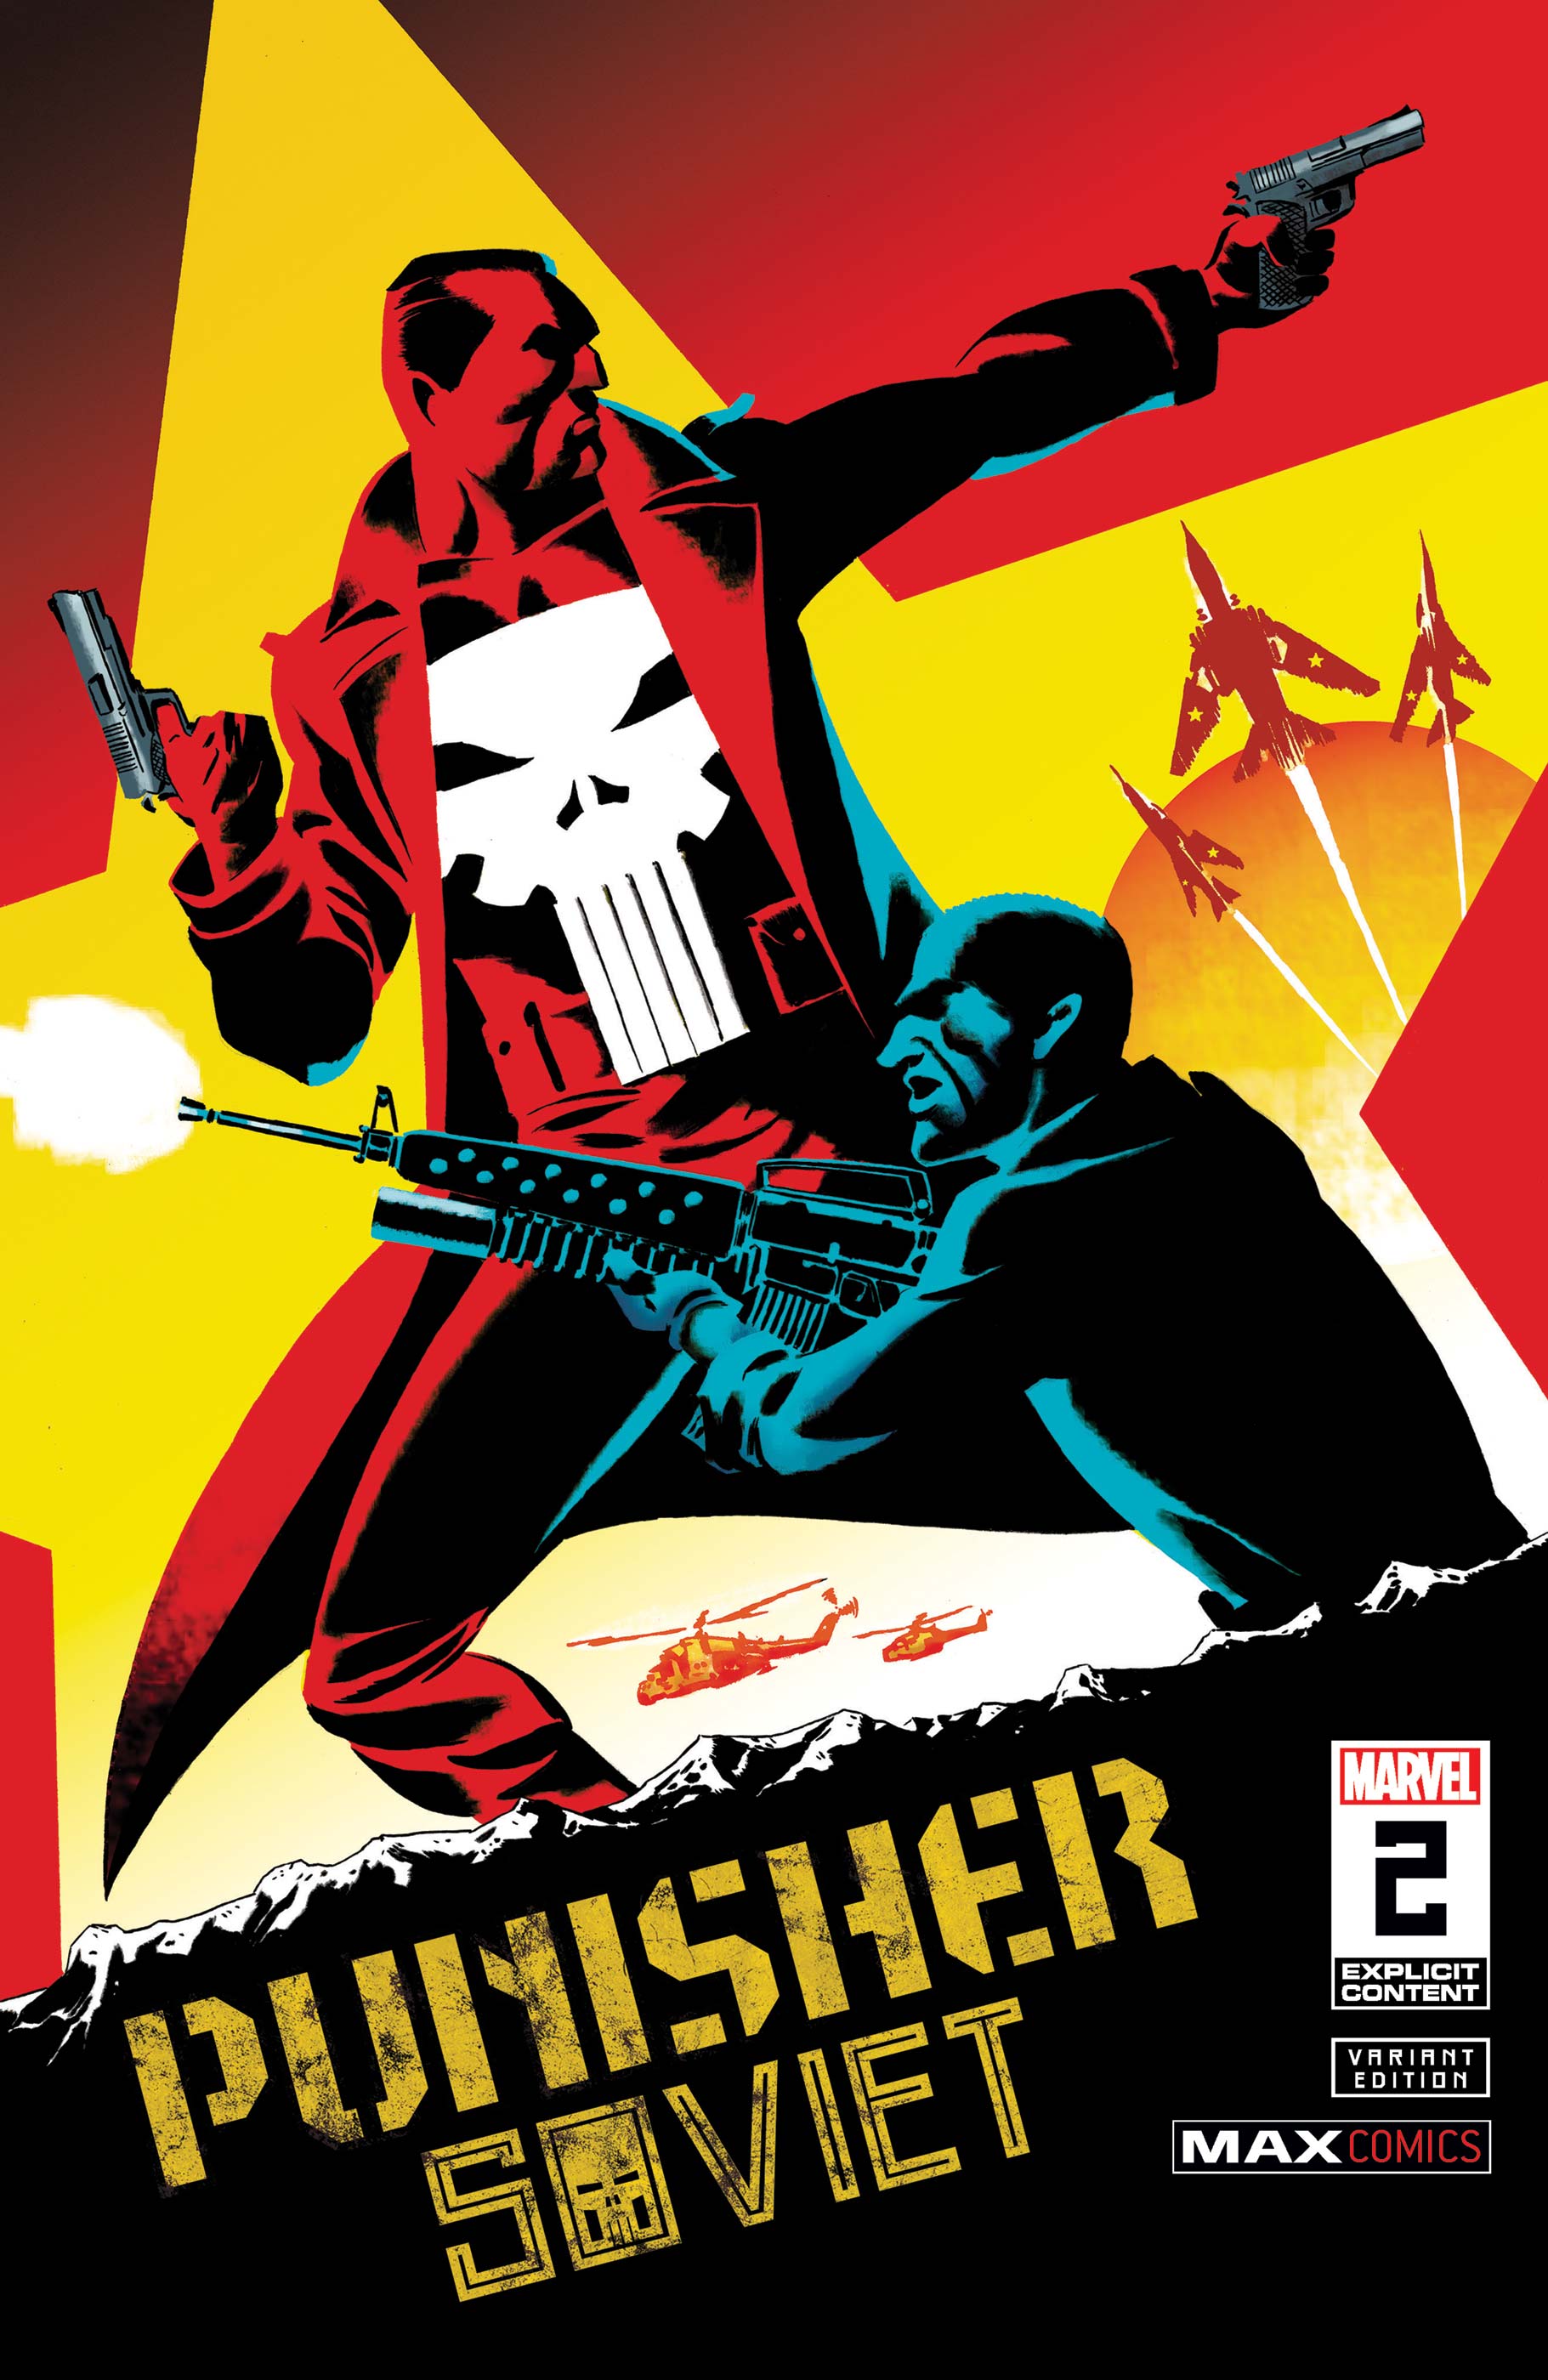 Punisher: Soviet (2019) #2 (Variant)